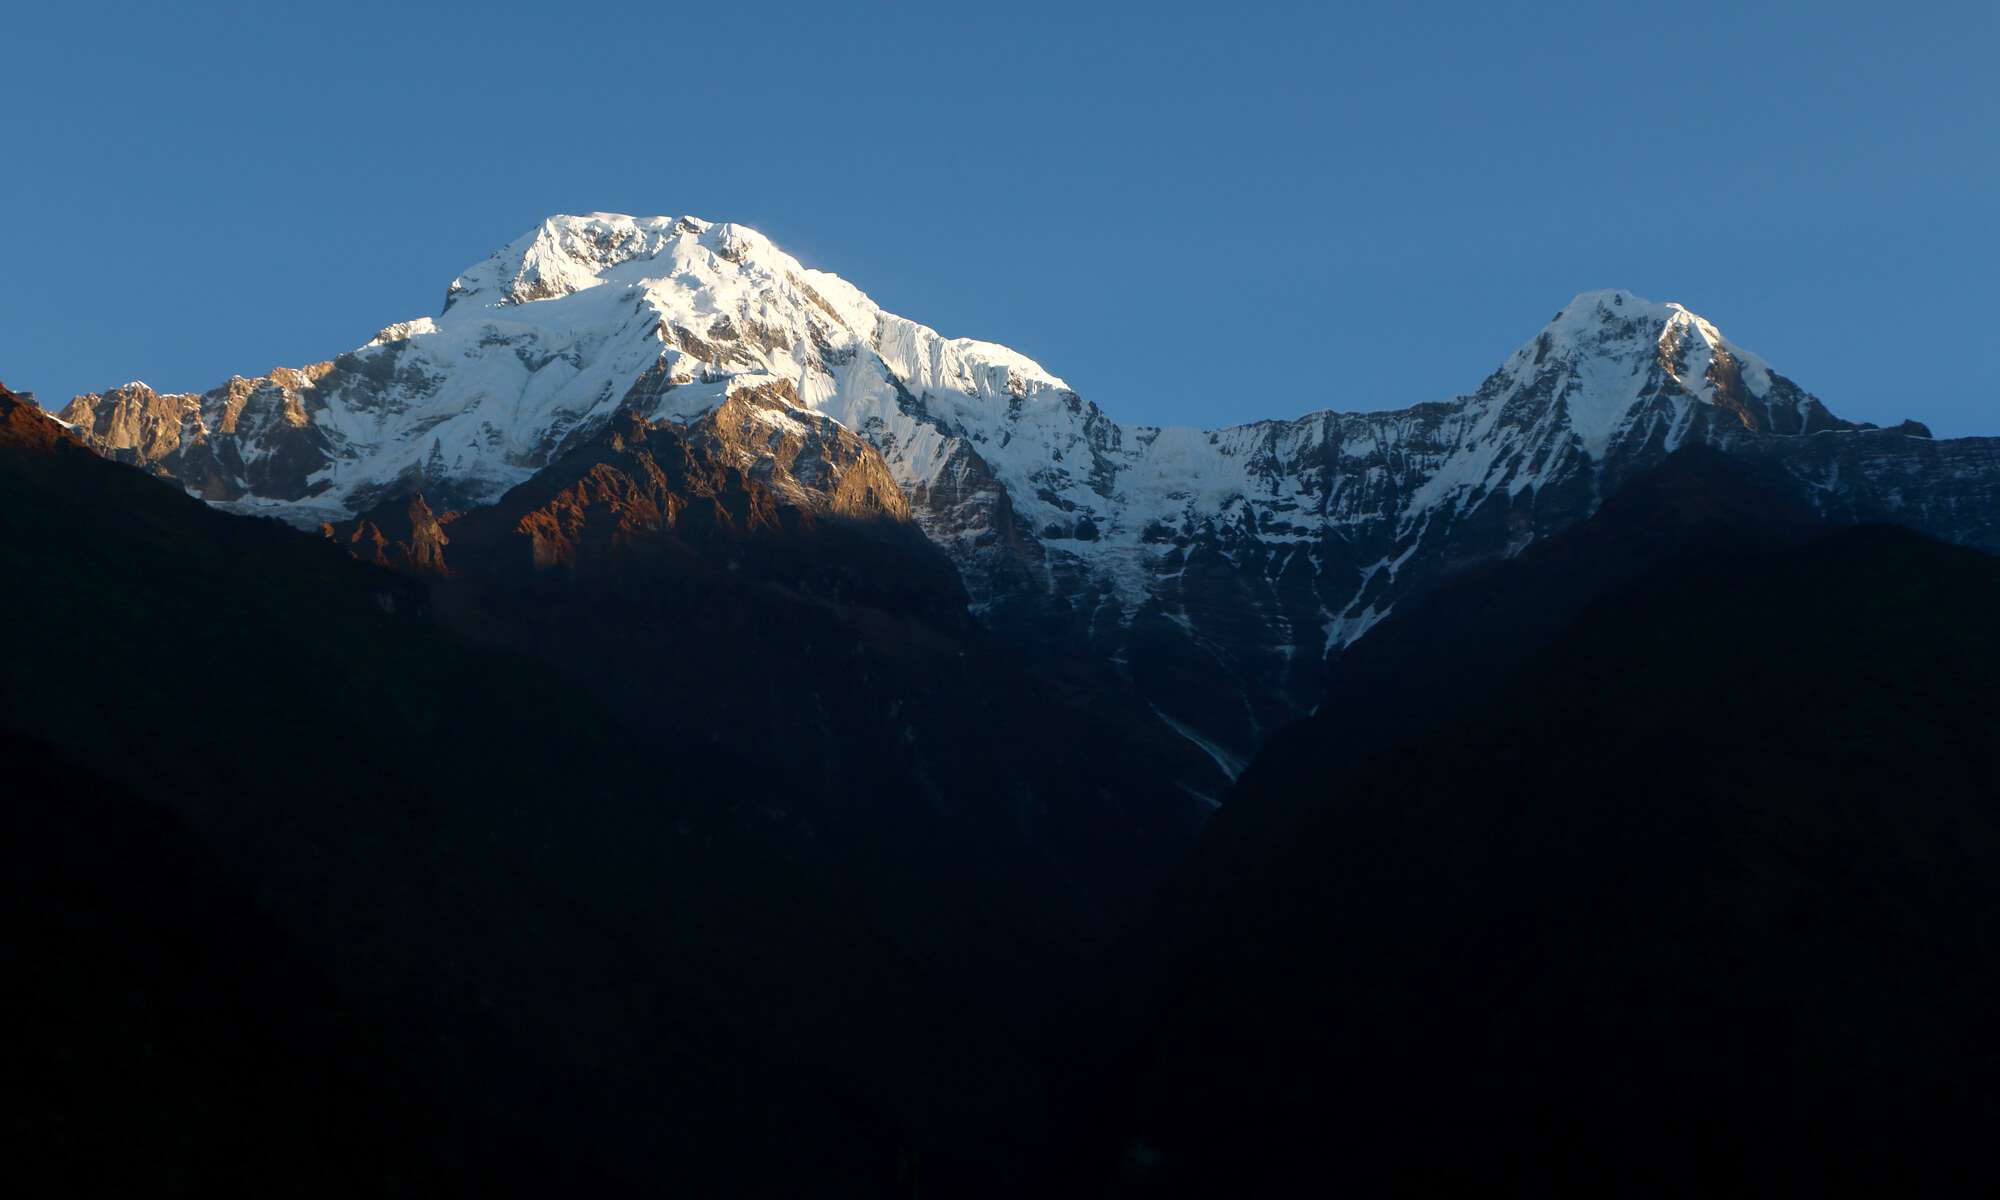 View from Tadapani on Annapurna Base Camp Trail